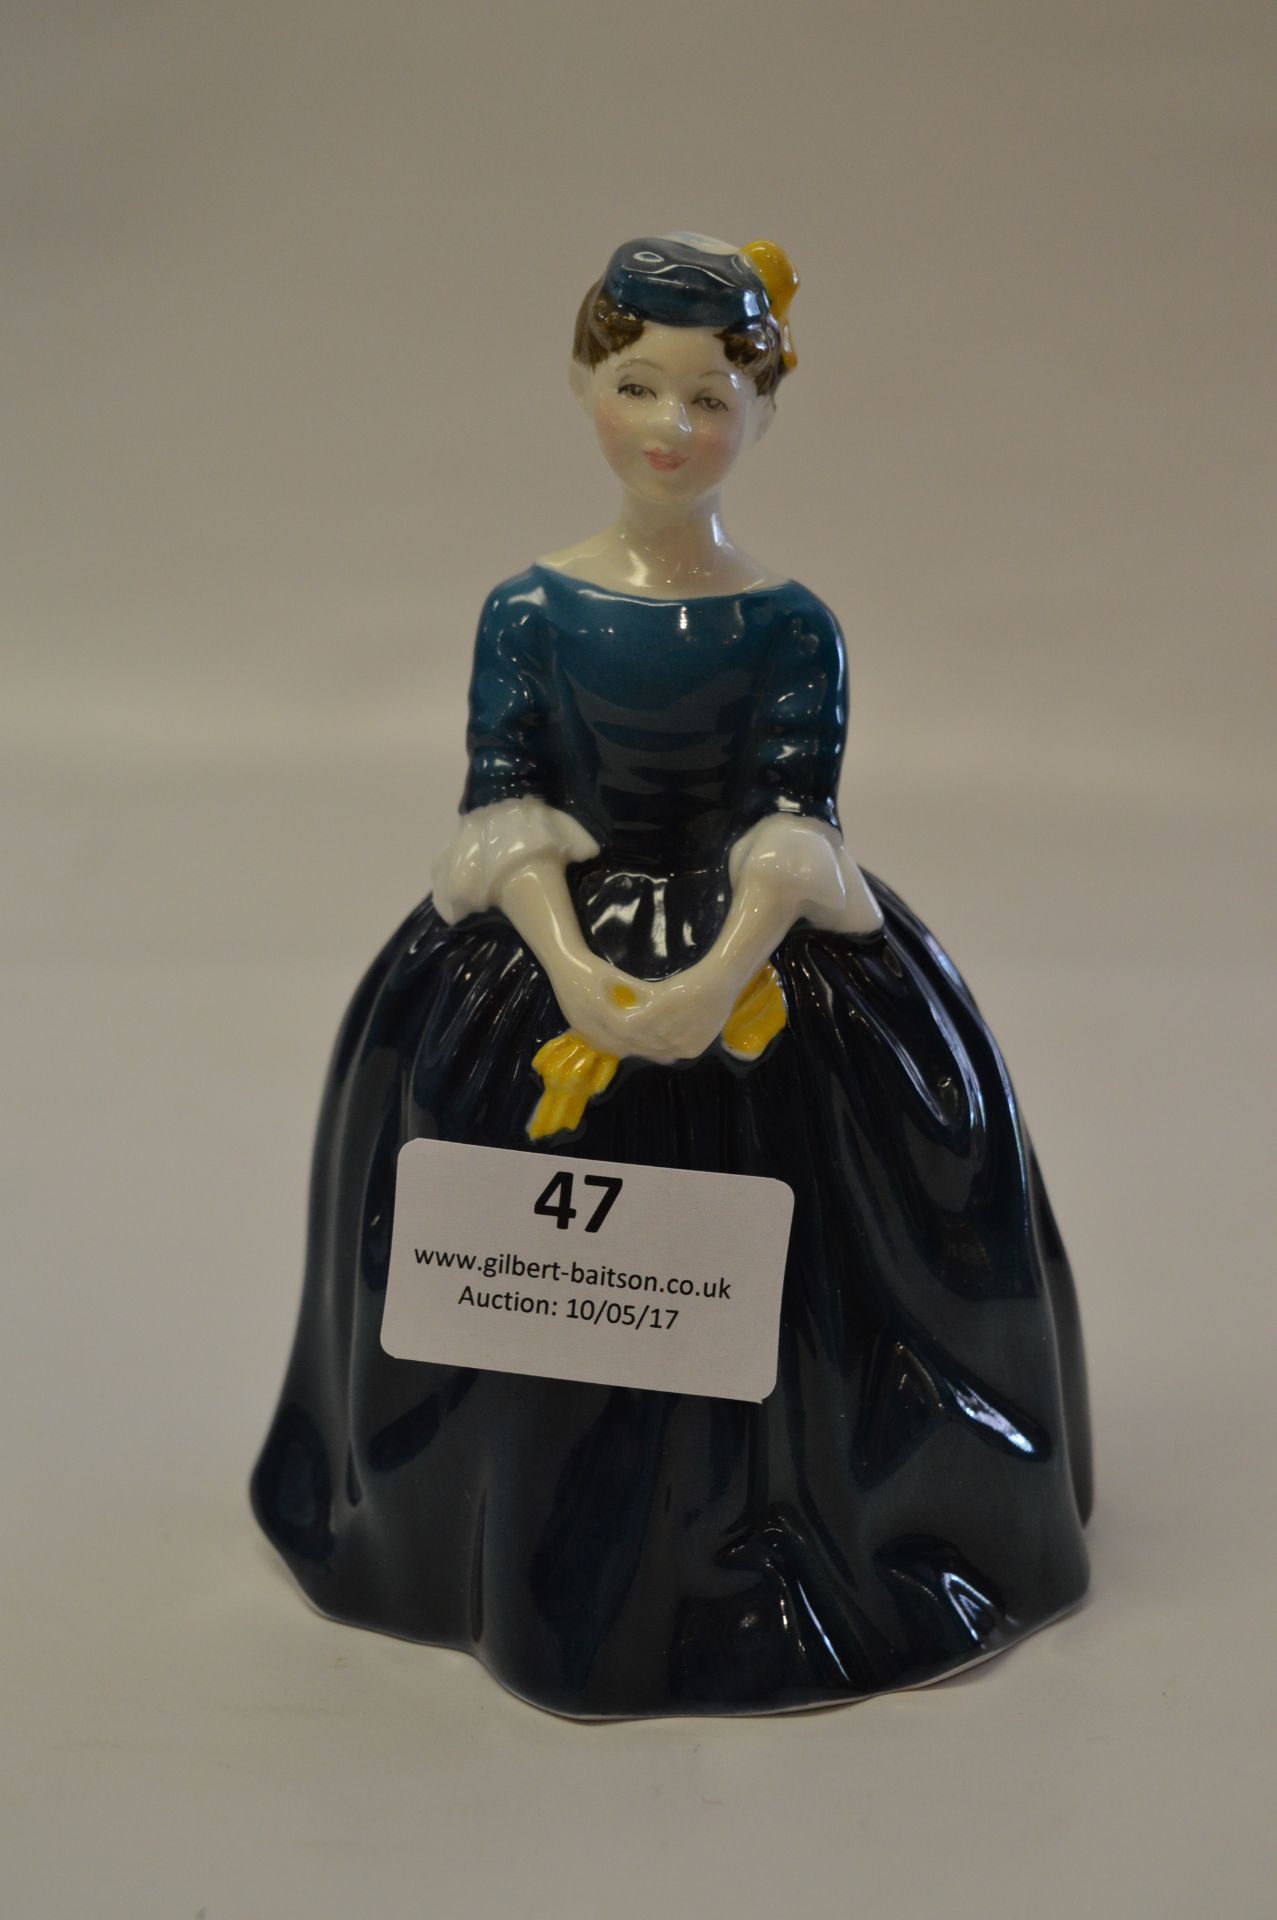 Royal Doulton Figurine "Cherie"